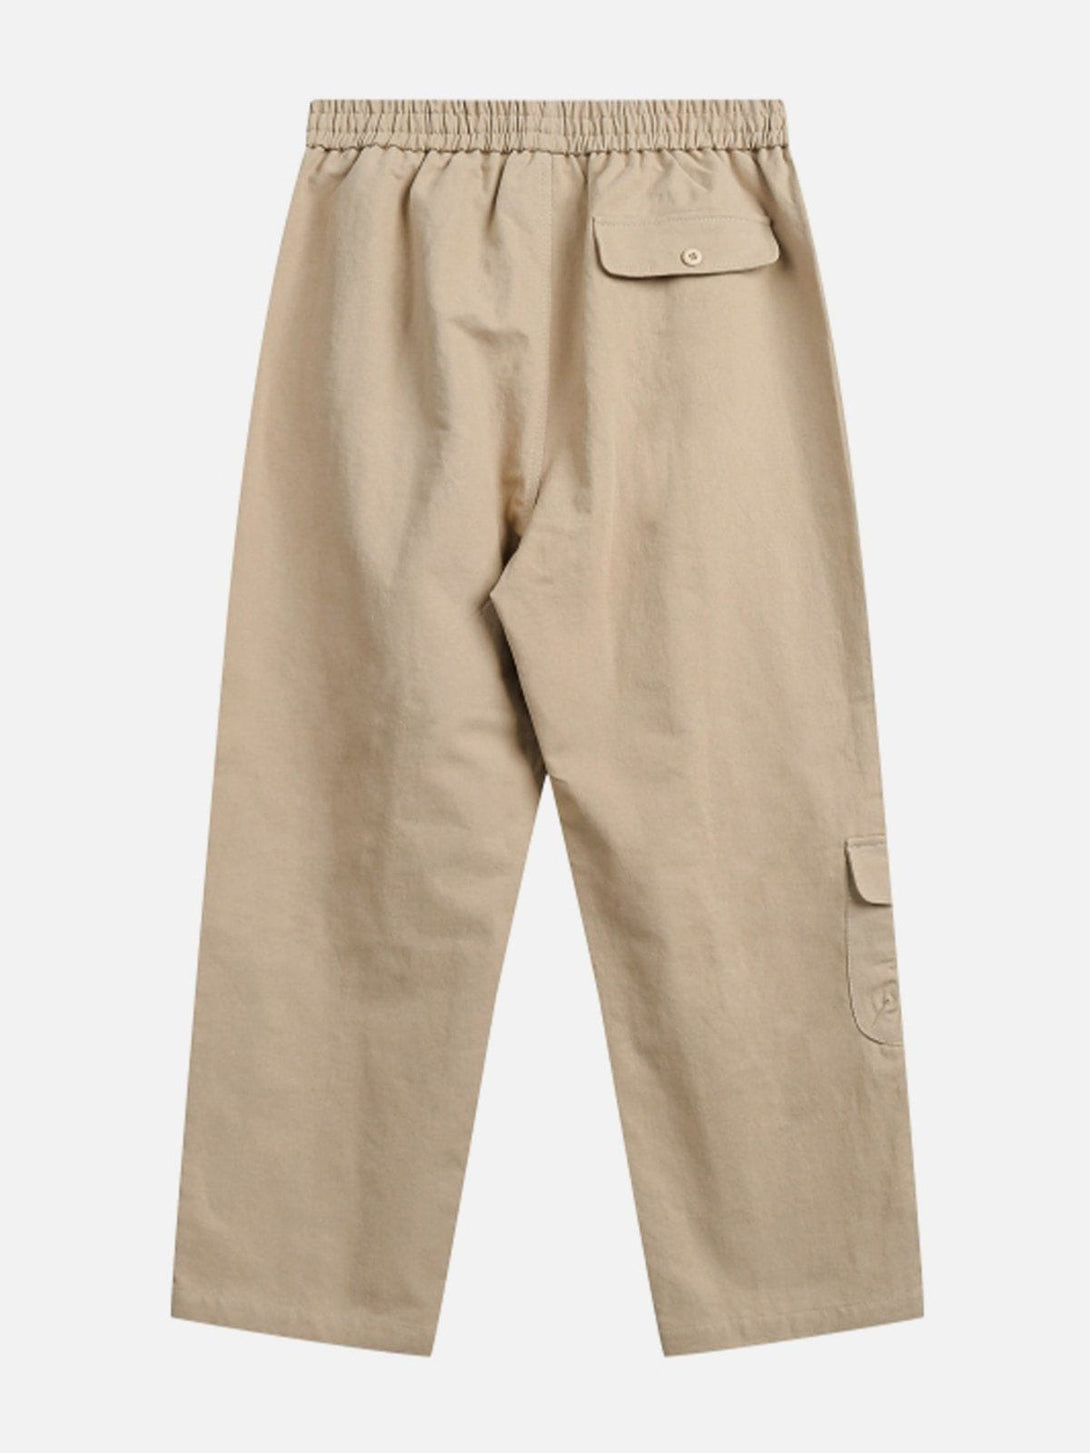 Levefly - Irregular Pocket Design Cargo Pants - Streetwear Fashion - levefly.com